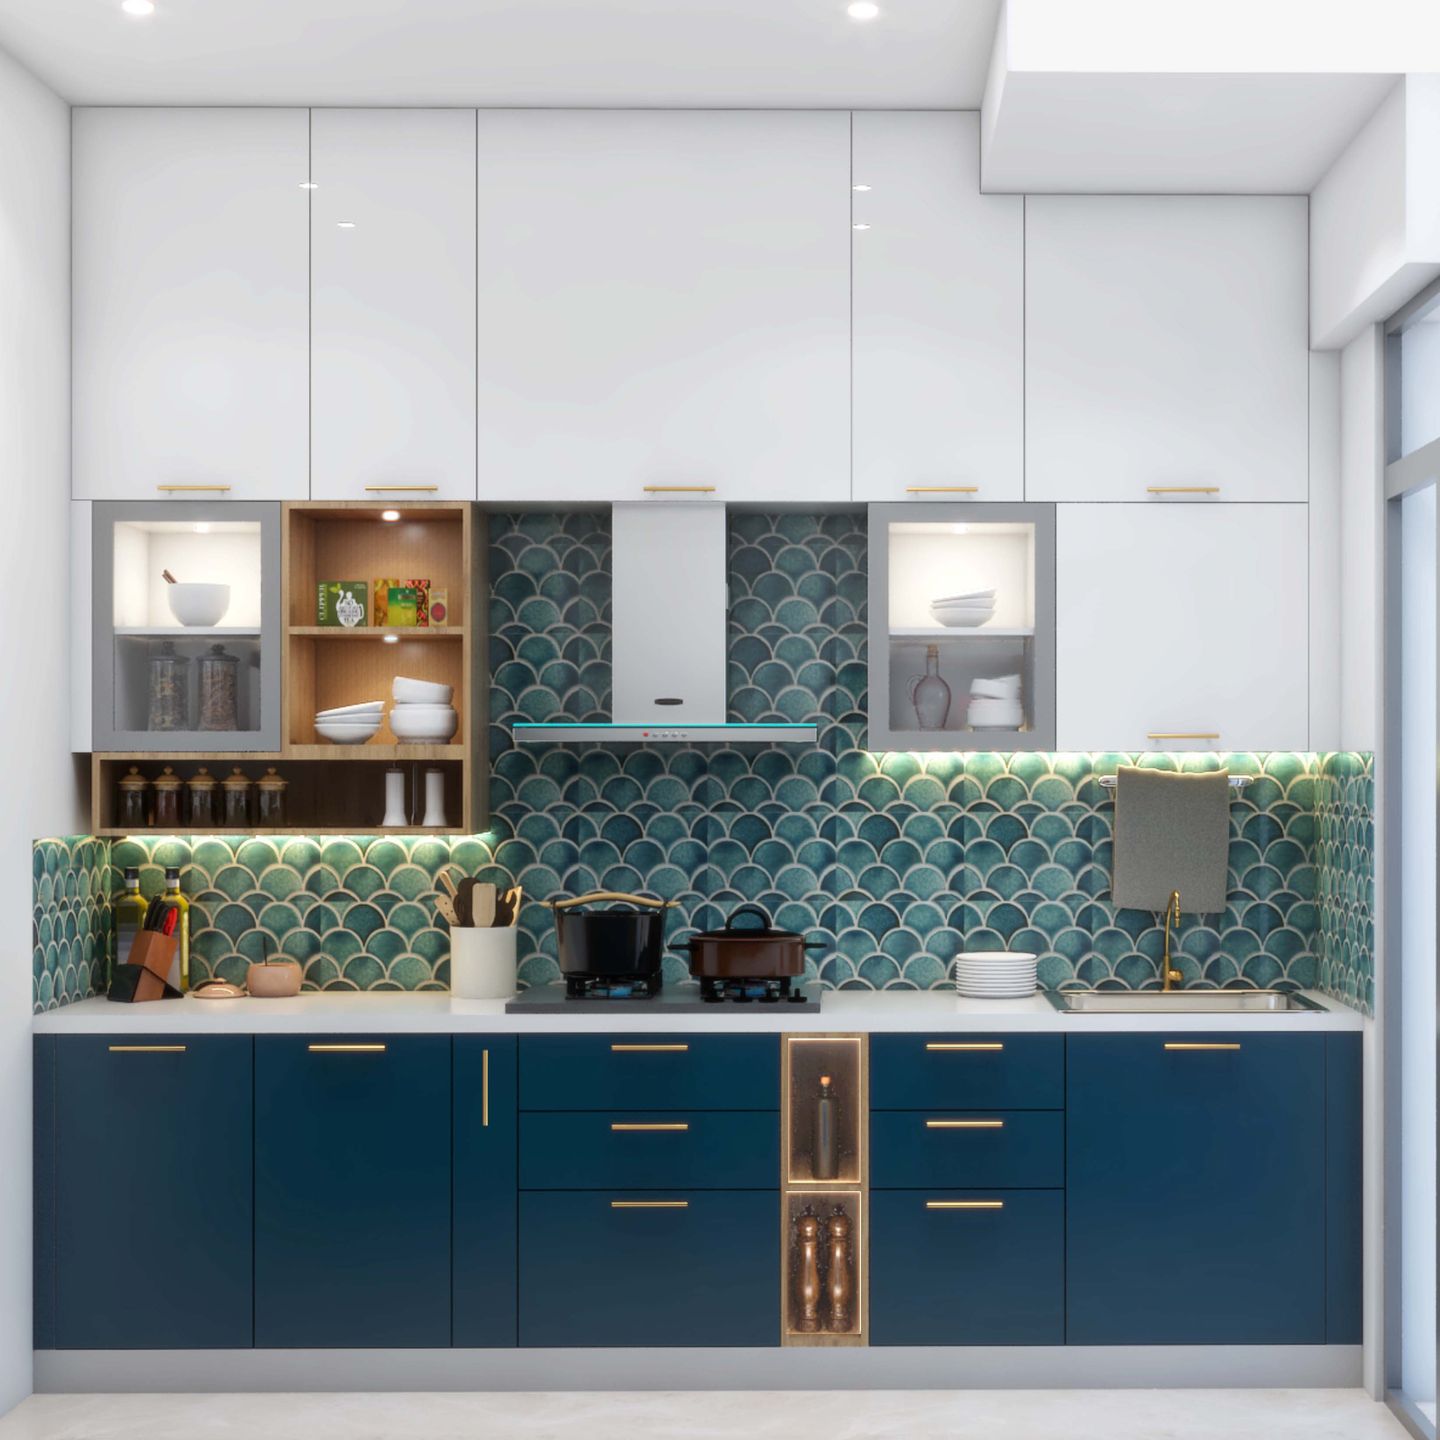 Parallel Kitchen With A Green Backsplash - Livspace